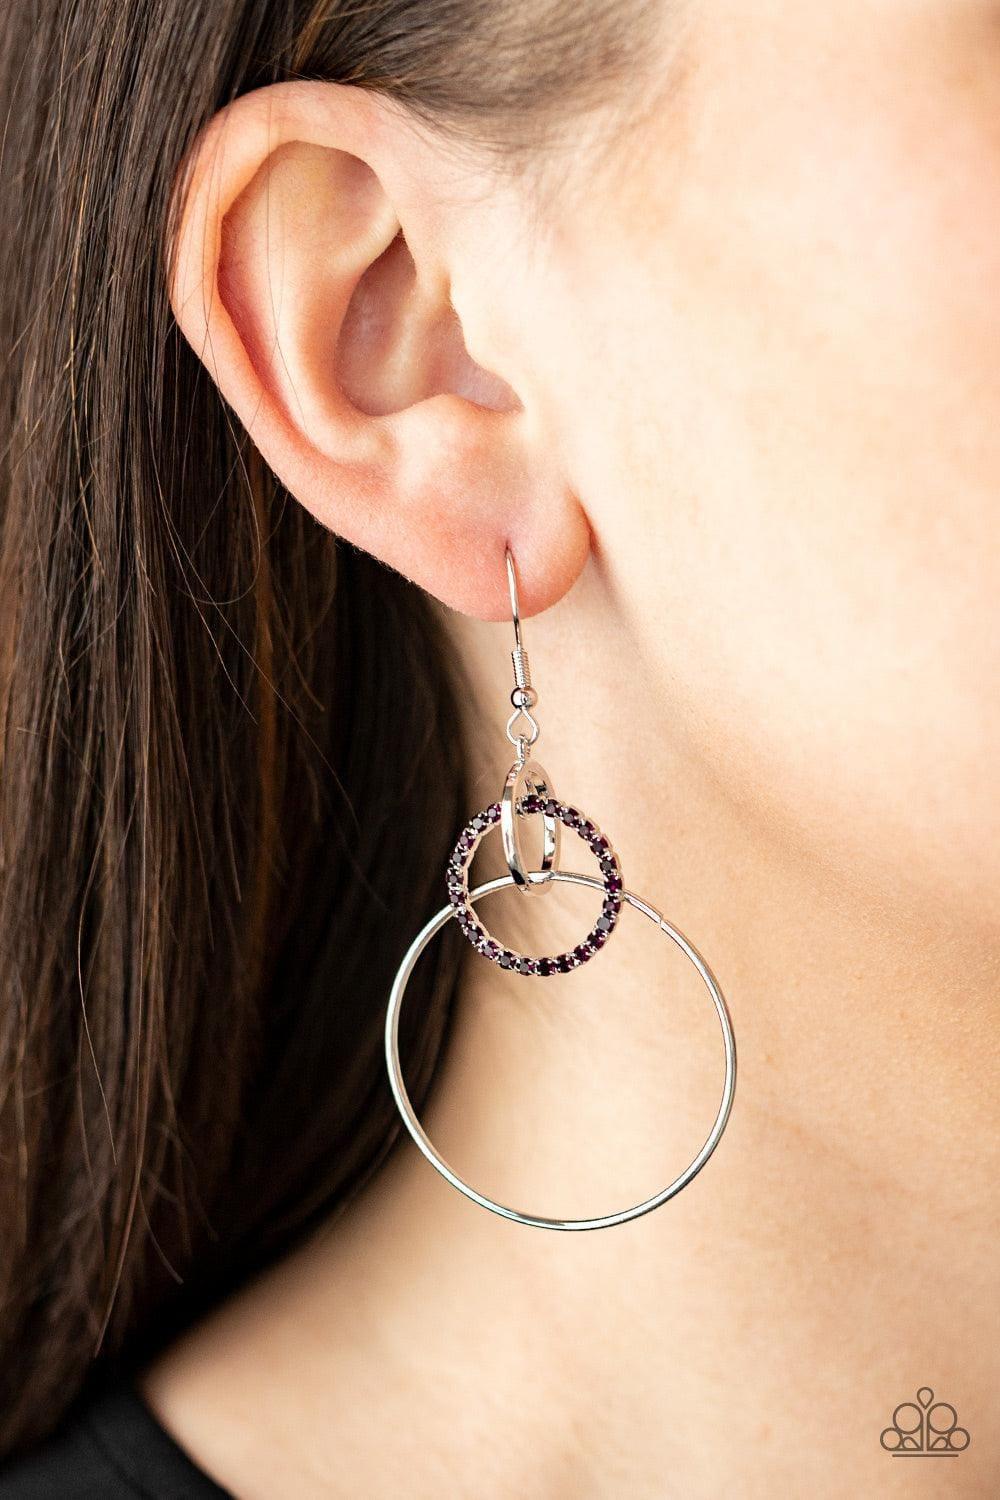 Paparazzi Accessories - In An Orderly Fashion - Purple Earrings - Bling by JessieK